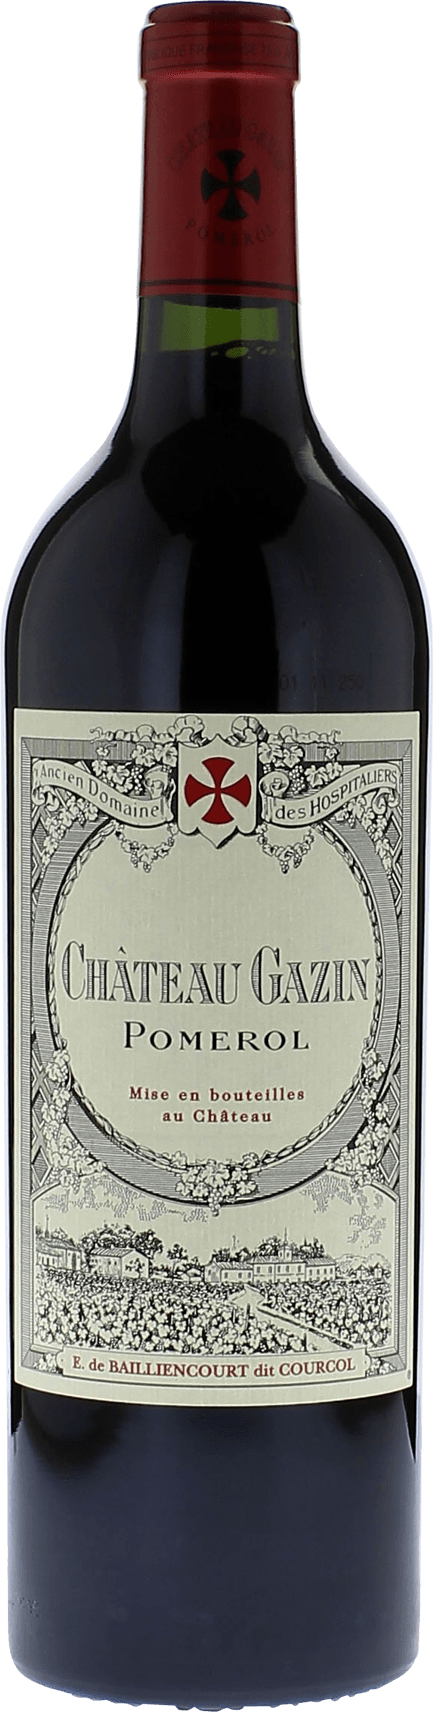 Gazin 1993  Pomerol, Bordeaux rouge